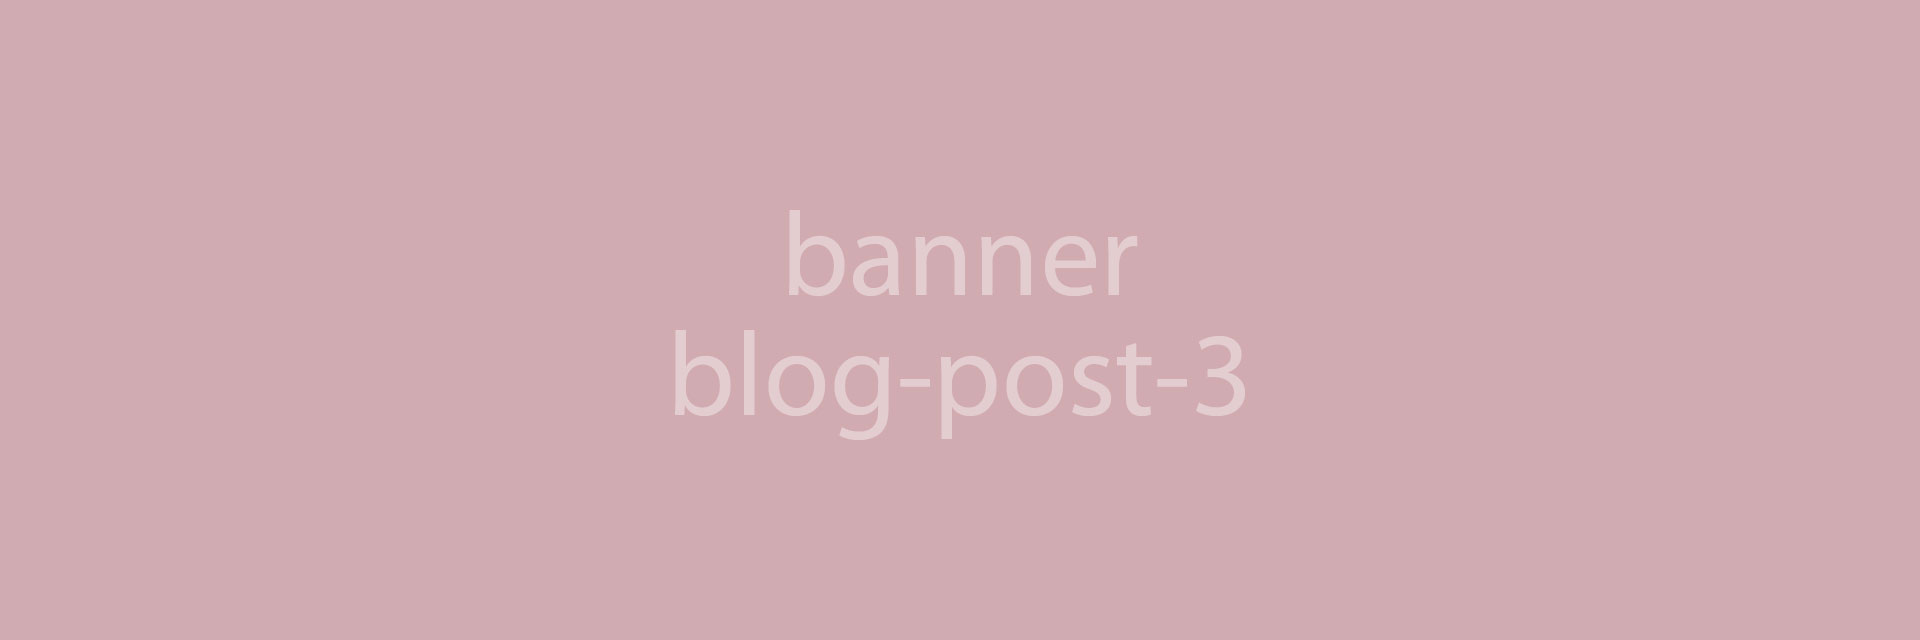 Blog Post 3